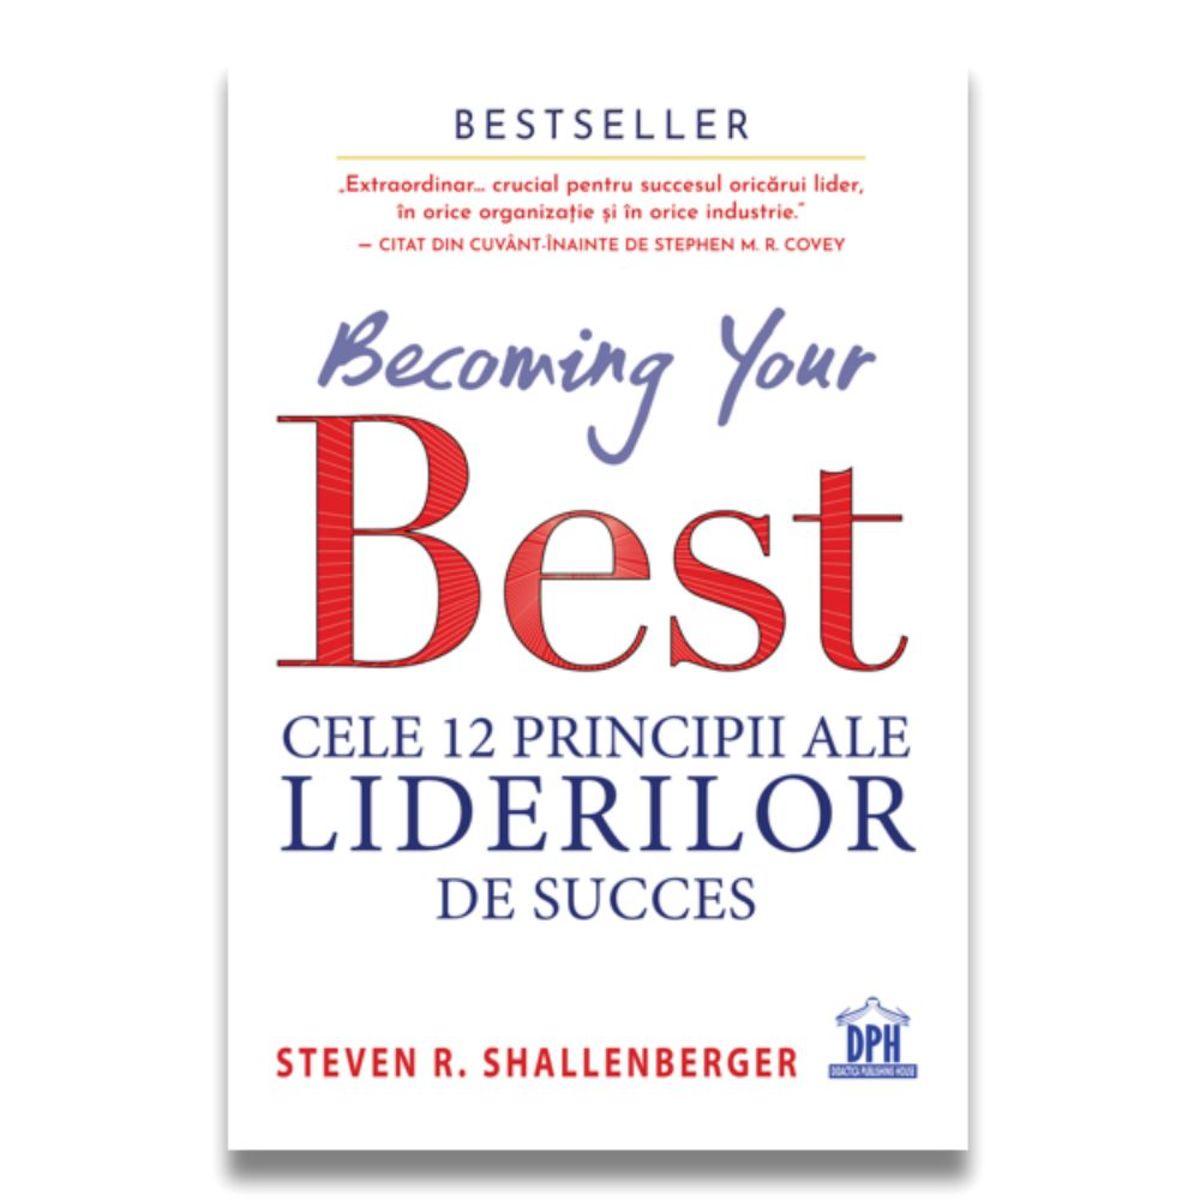 Becoming your best, Cele 12 principii ale liderilor de succes, Steve Shallenberger DPH